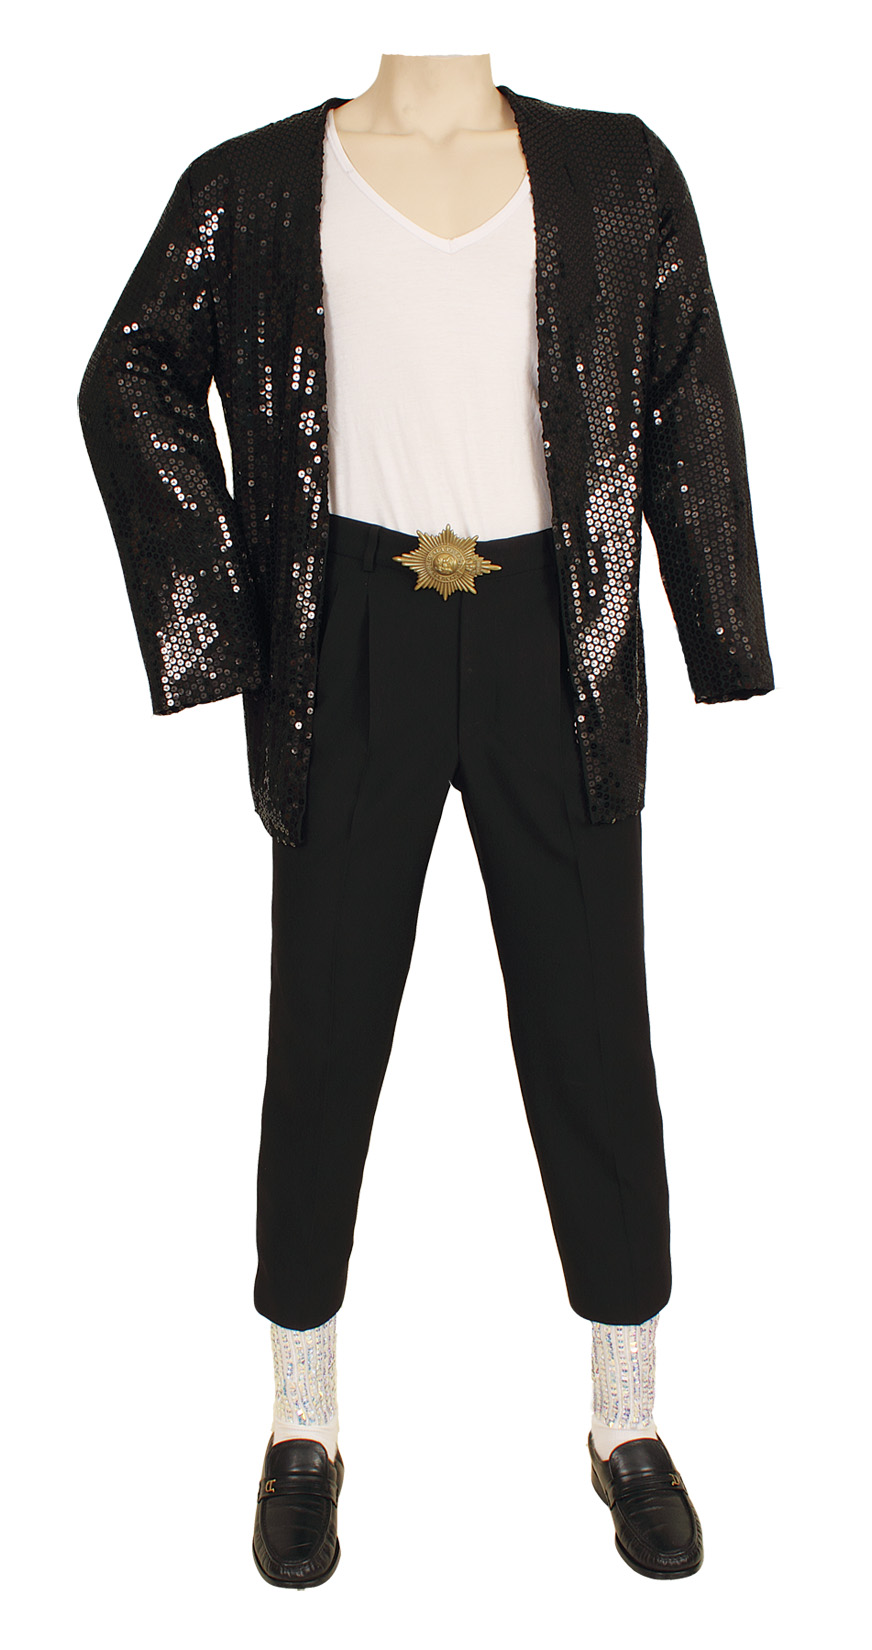 Sold at Auction: Michael Jackson Shirt & Pants